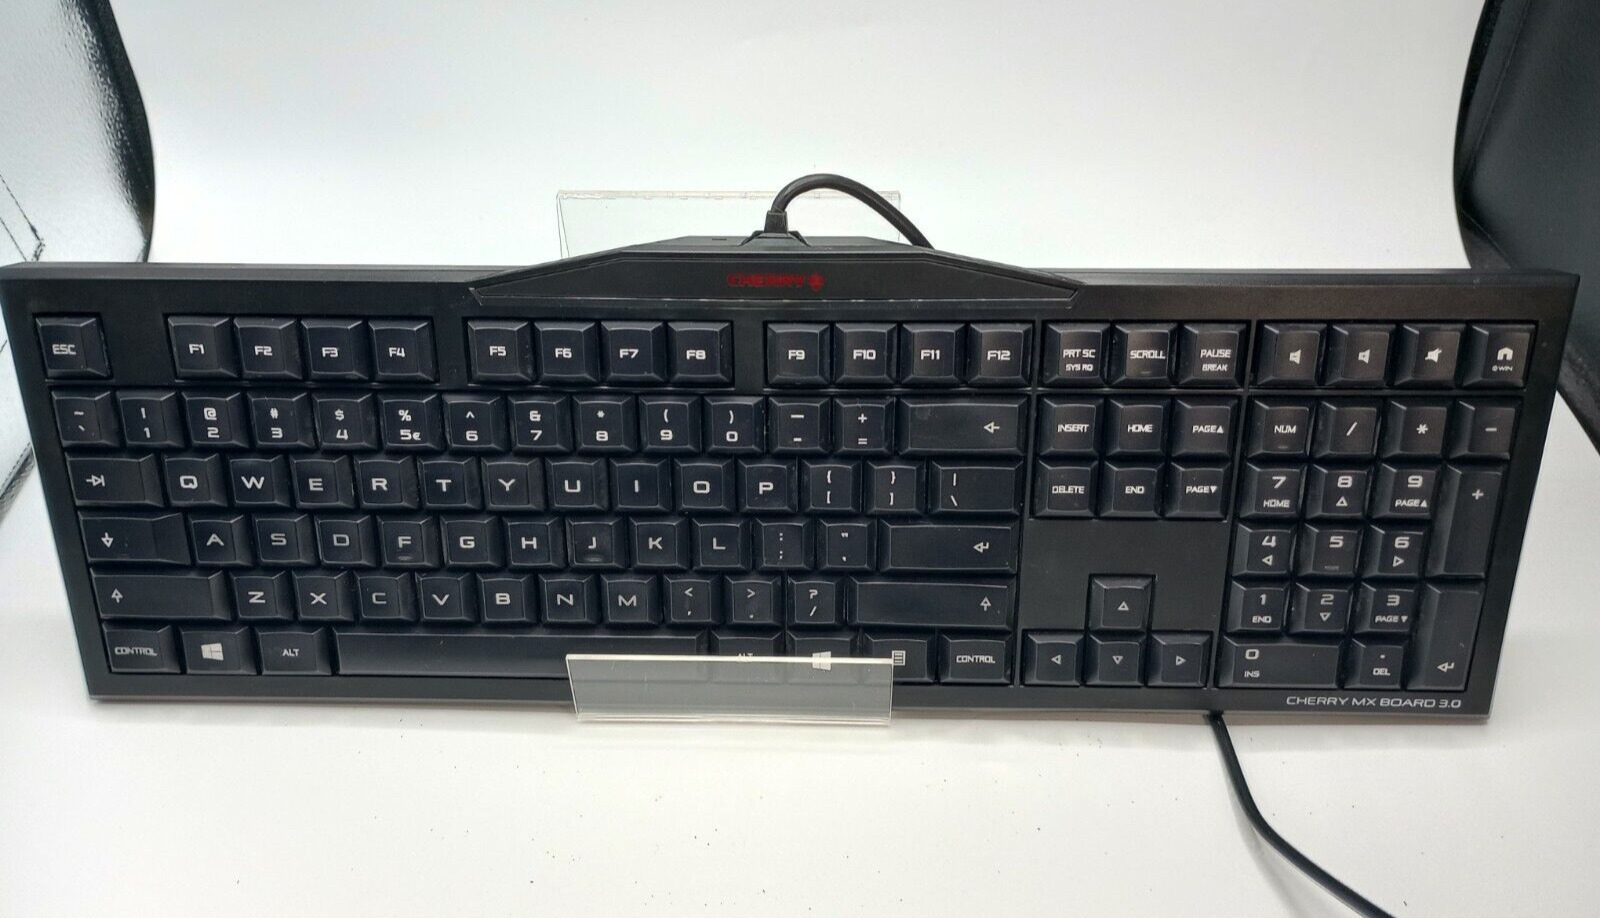 CHERRY MX BOARD 3.0 S Mechanical Keyboard Model: MX 3850 USB - Brown Switches